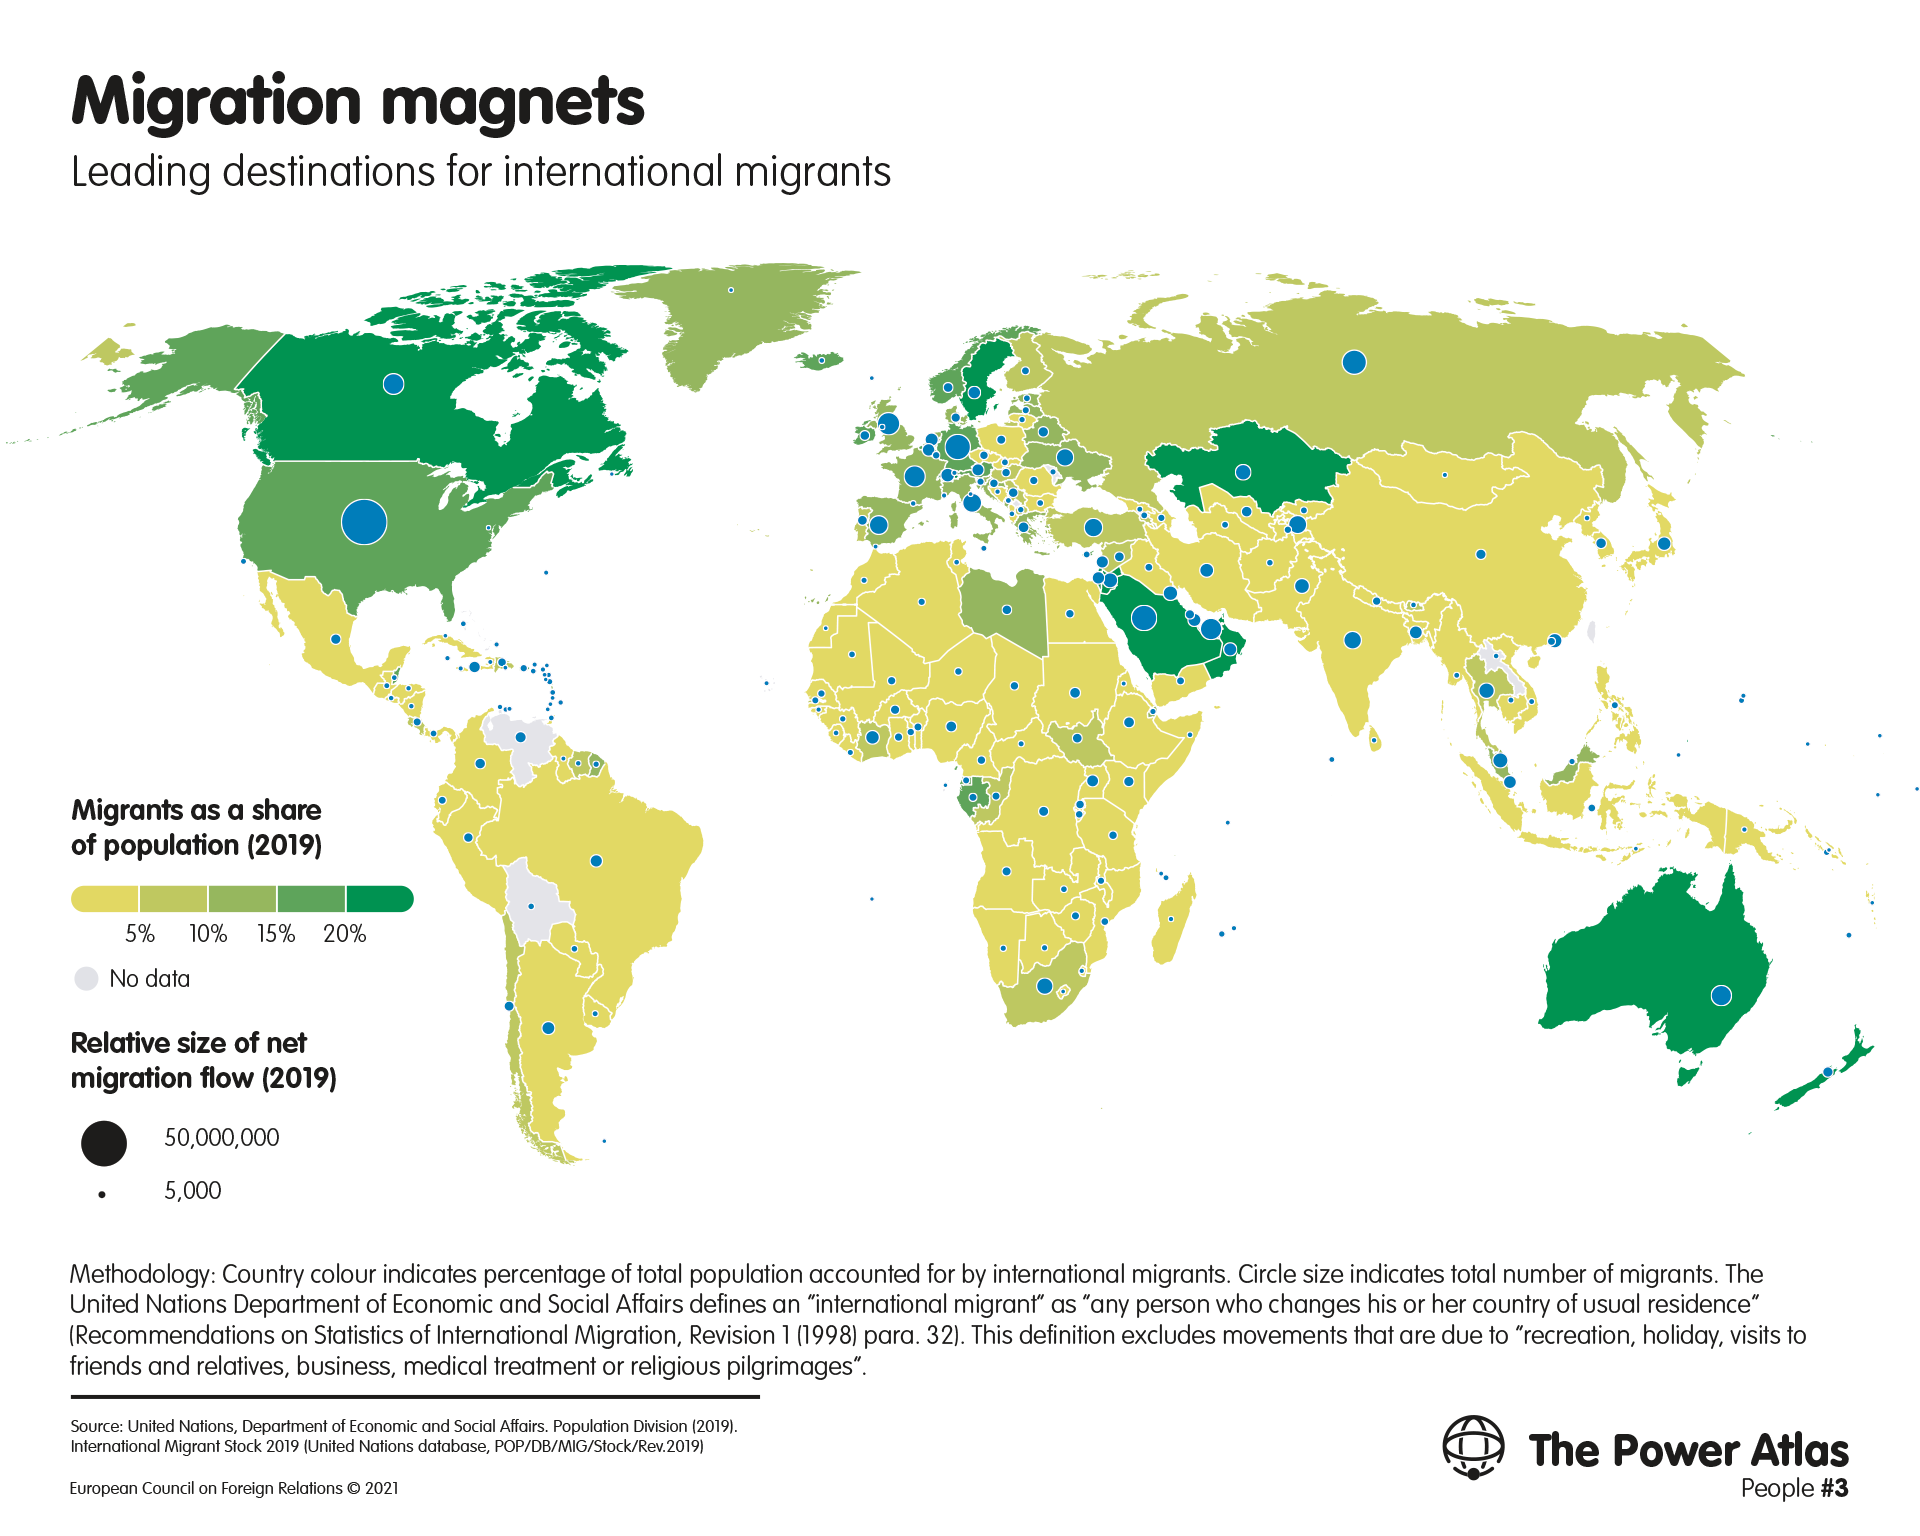 Migration magnets: Leading destinations for international migrants